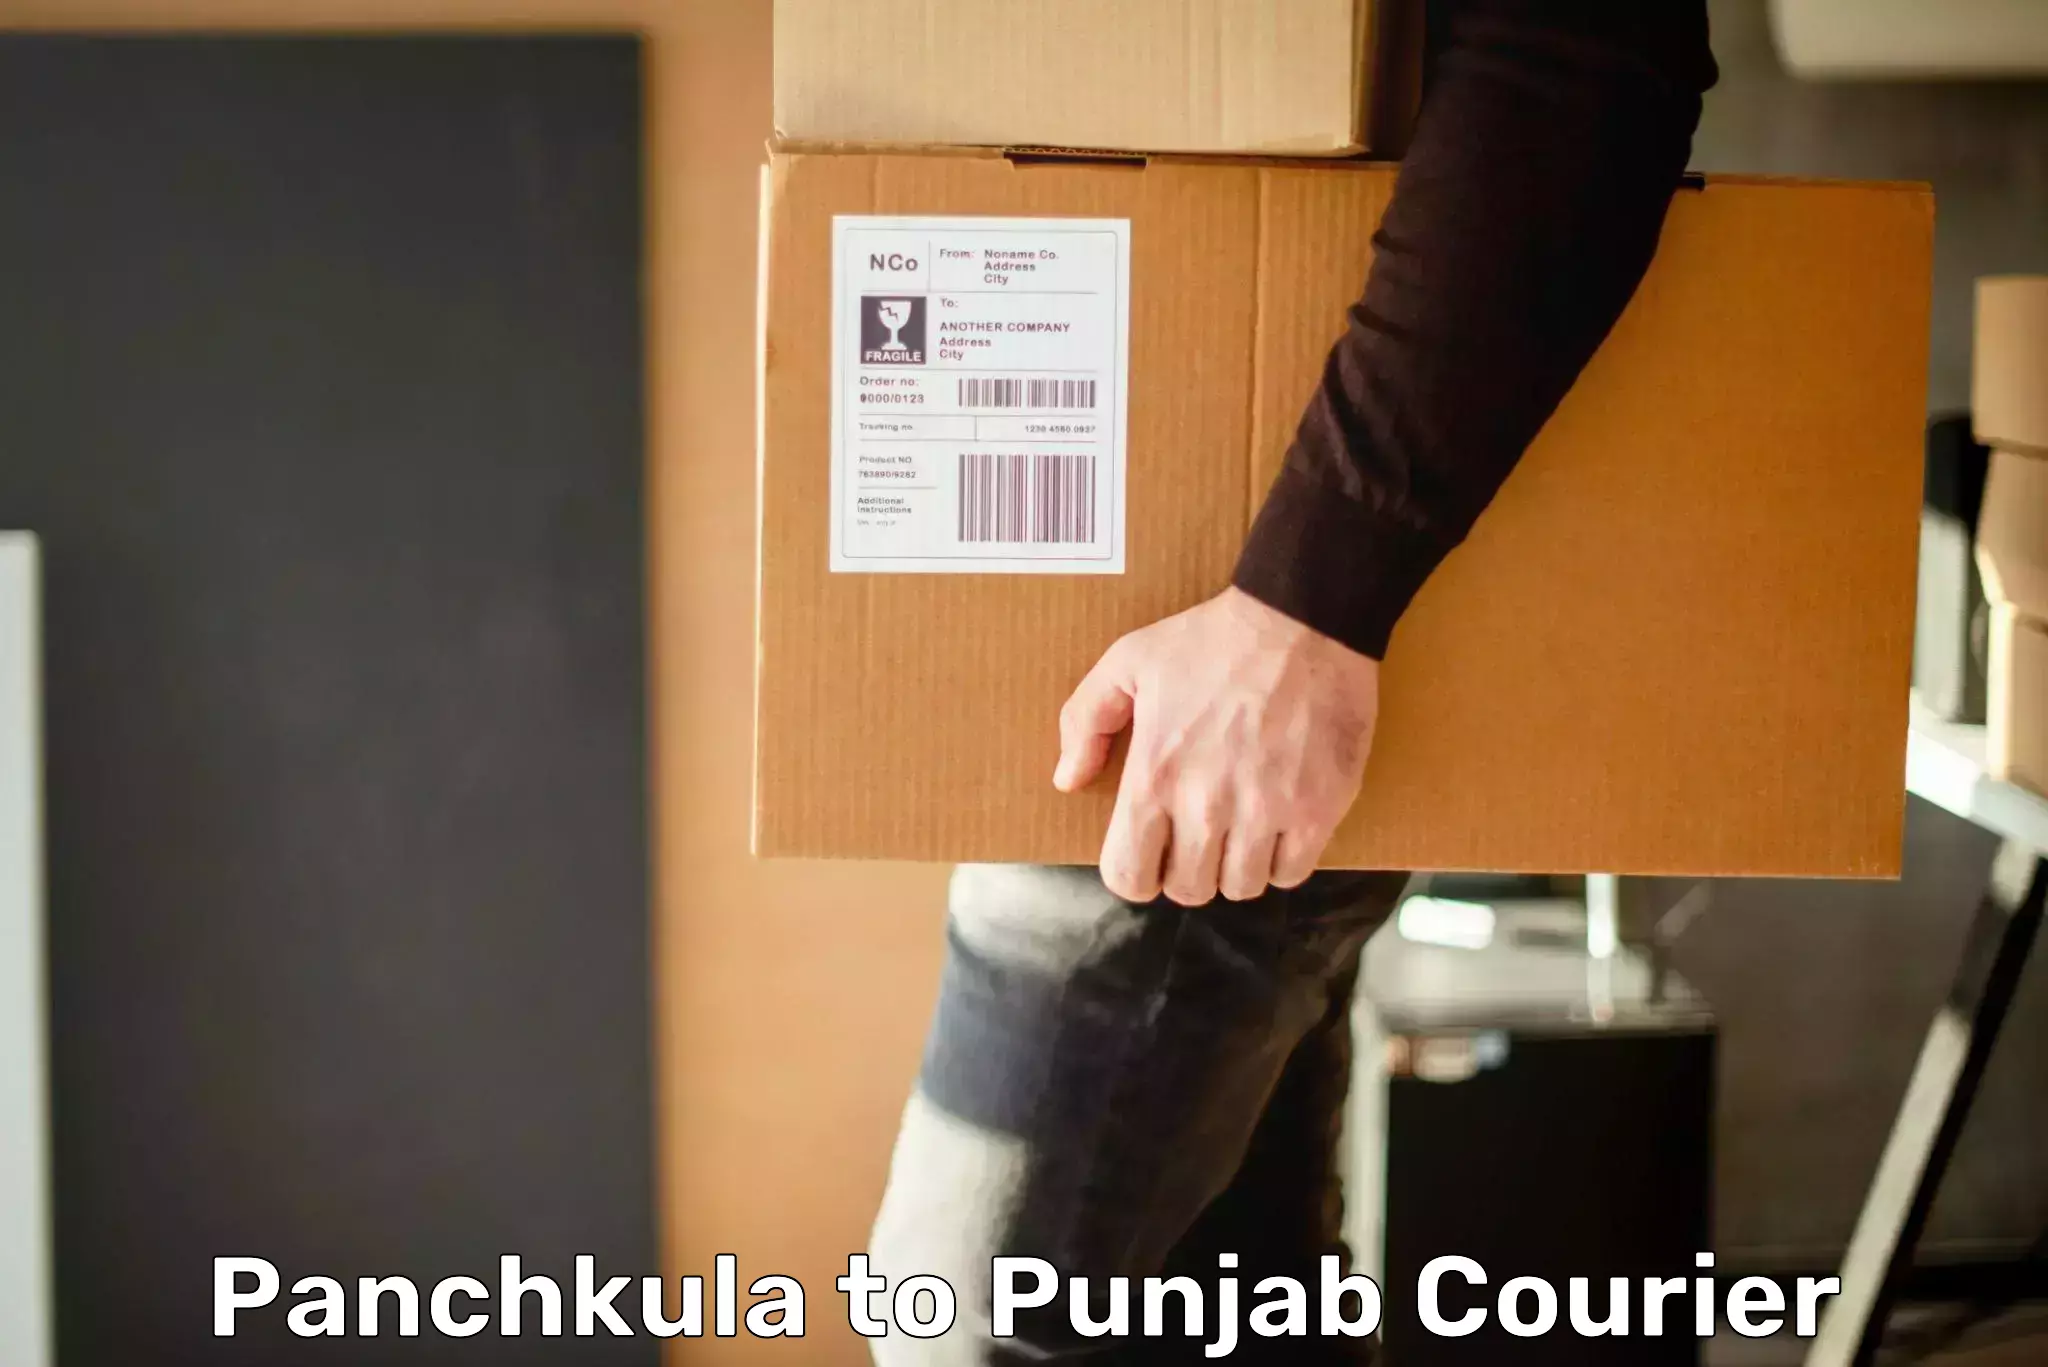 Courier service comparison Panchkula to Mansa